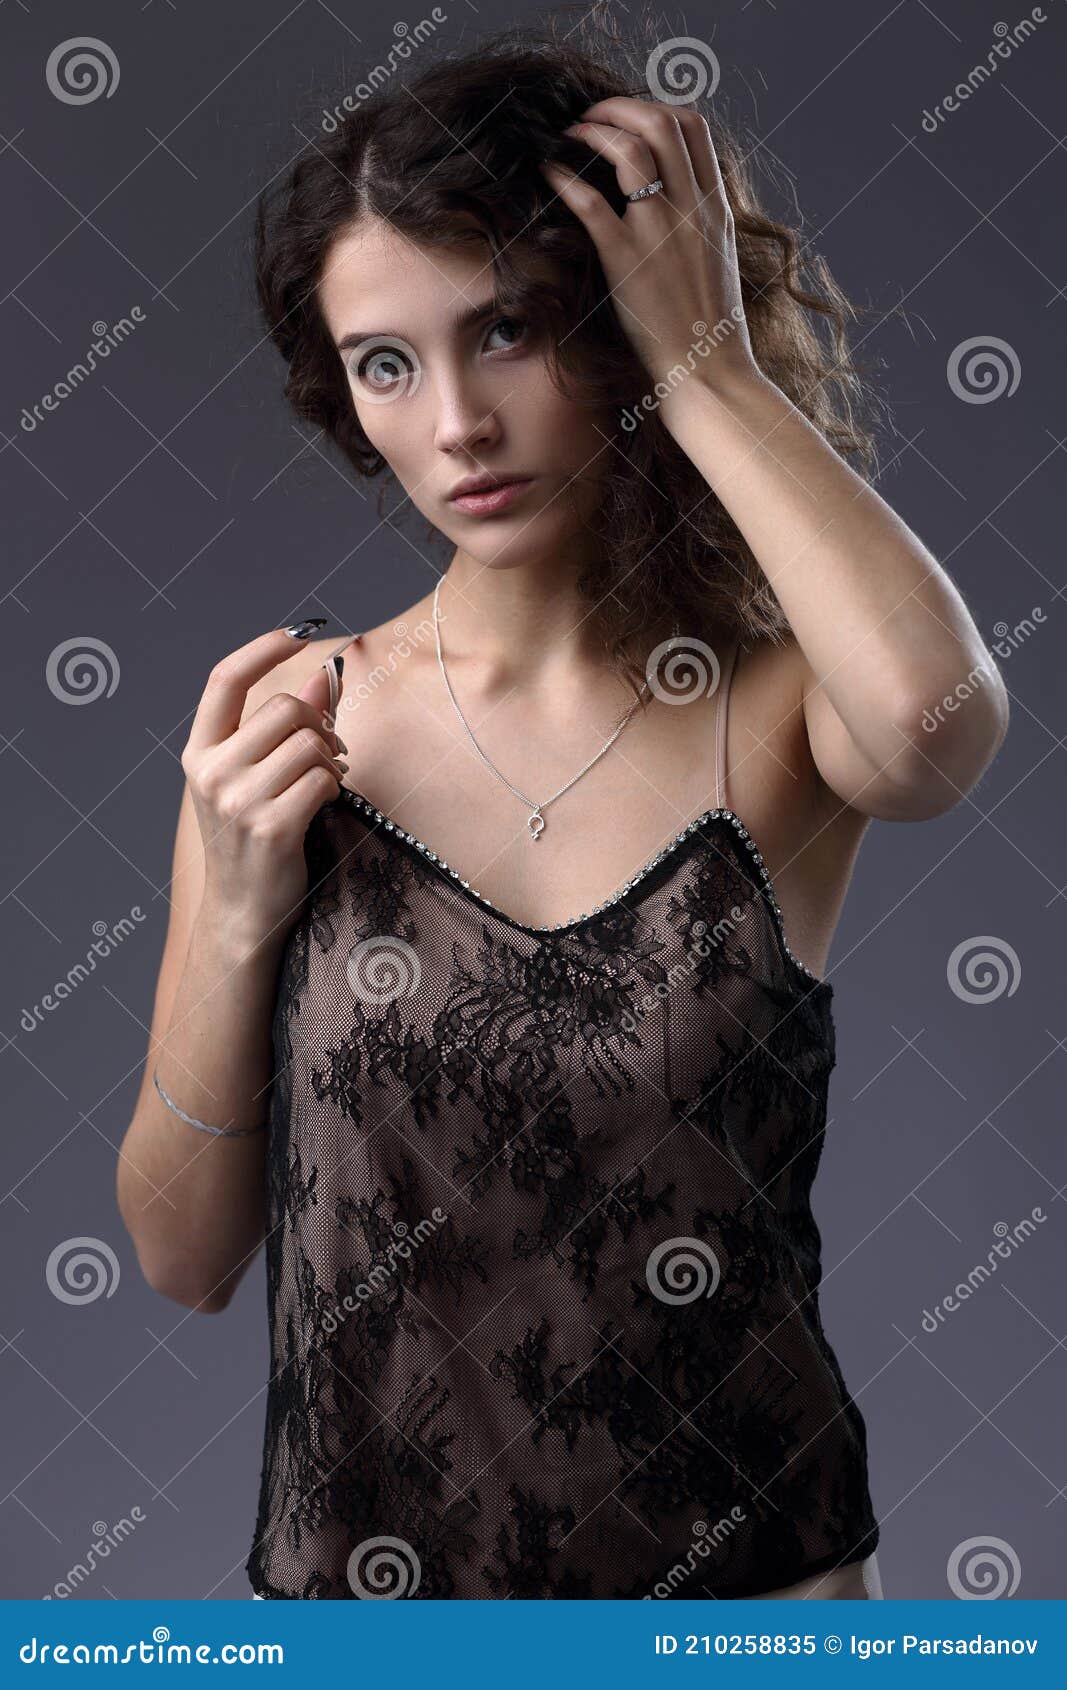 https://thumbs.dreamstime.com/z/studio-portrait-beautiful-girl-transparent-camisole-gray-background-beautiful-girl-transparent-camisole-210258835.jpg